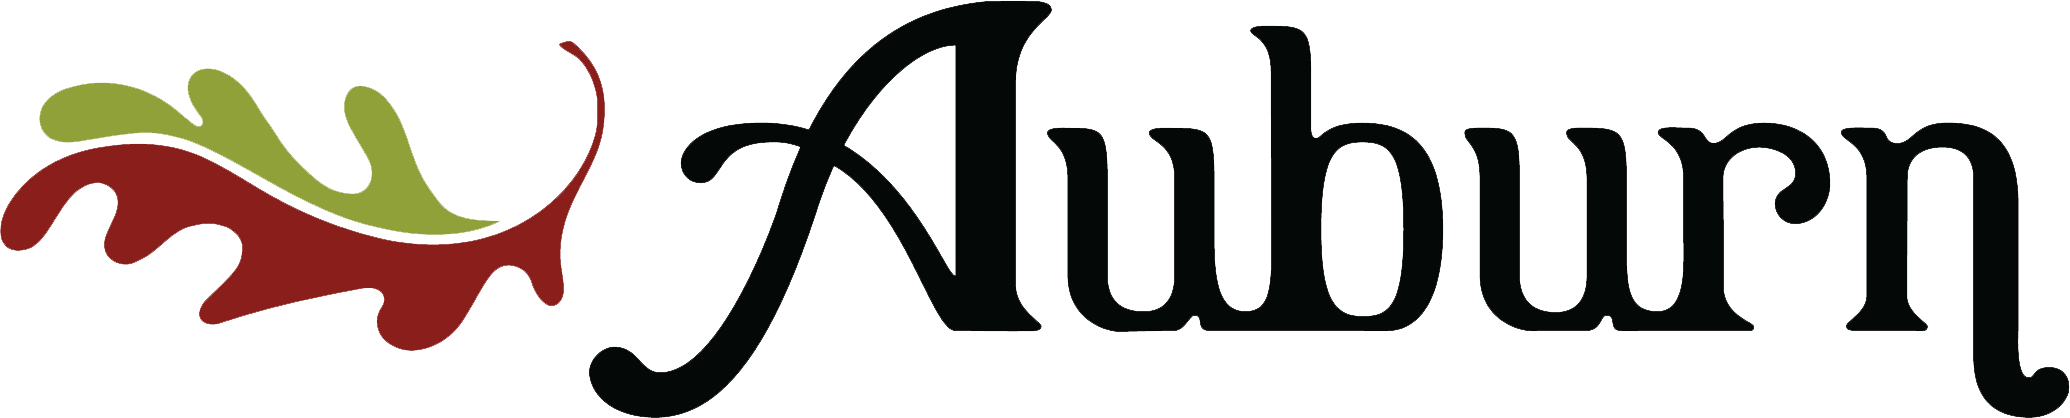 City of Auburn, GA City Logo